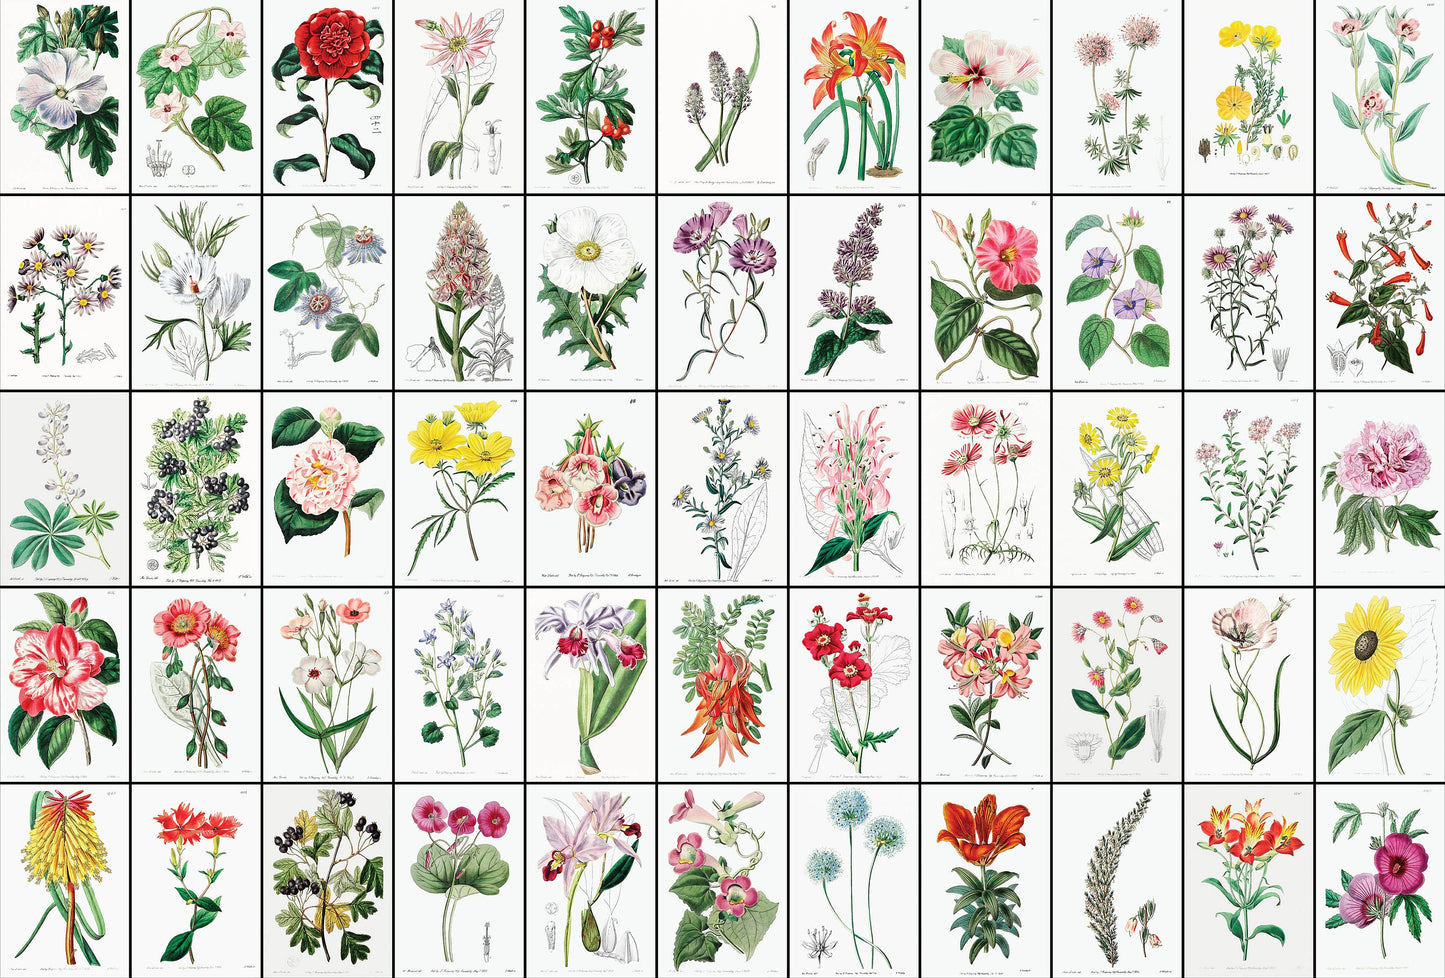 Edward's Botanical Register [110 Images]